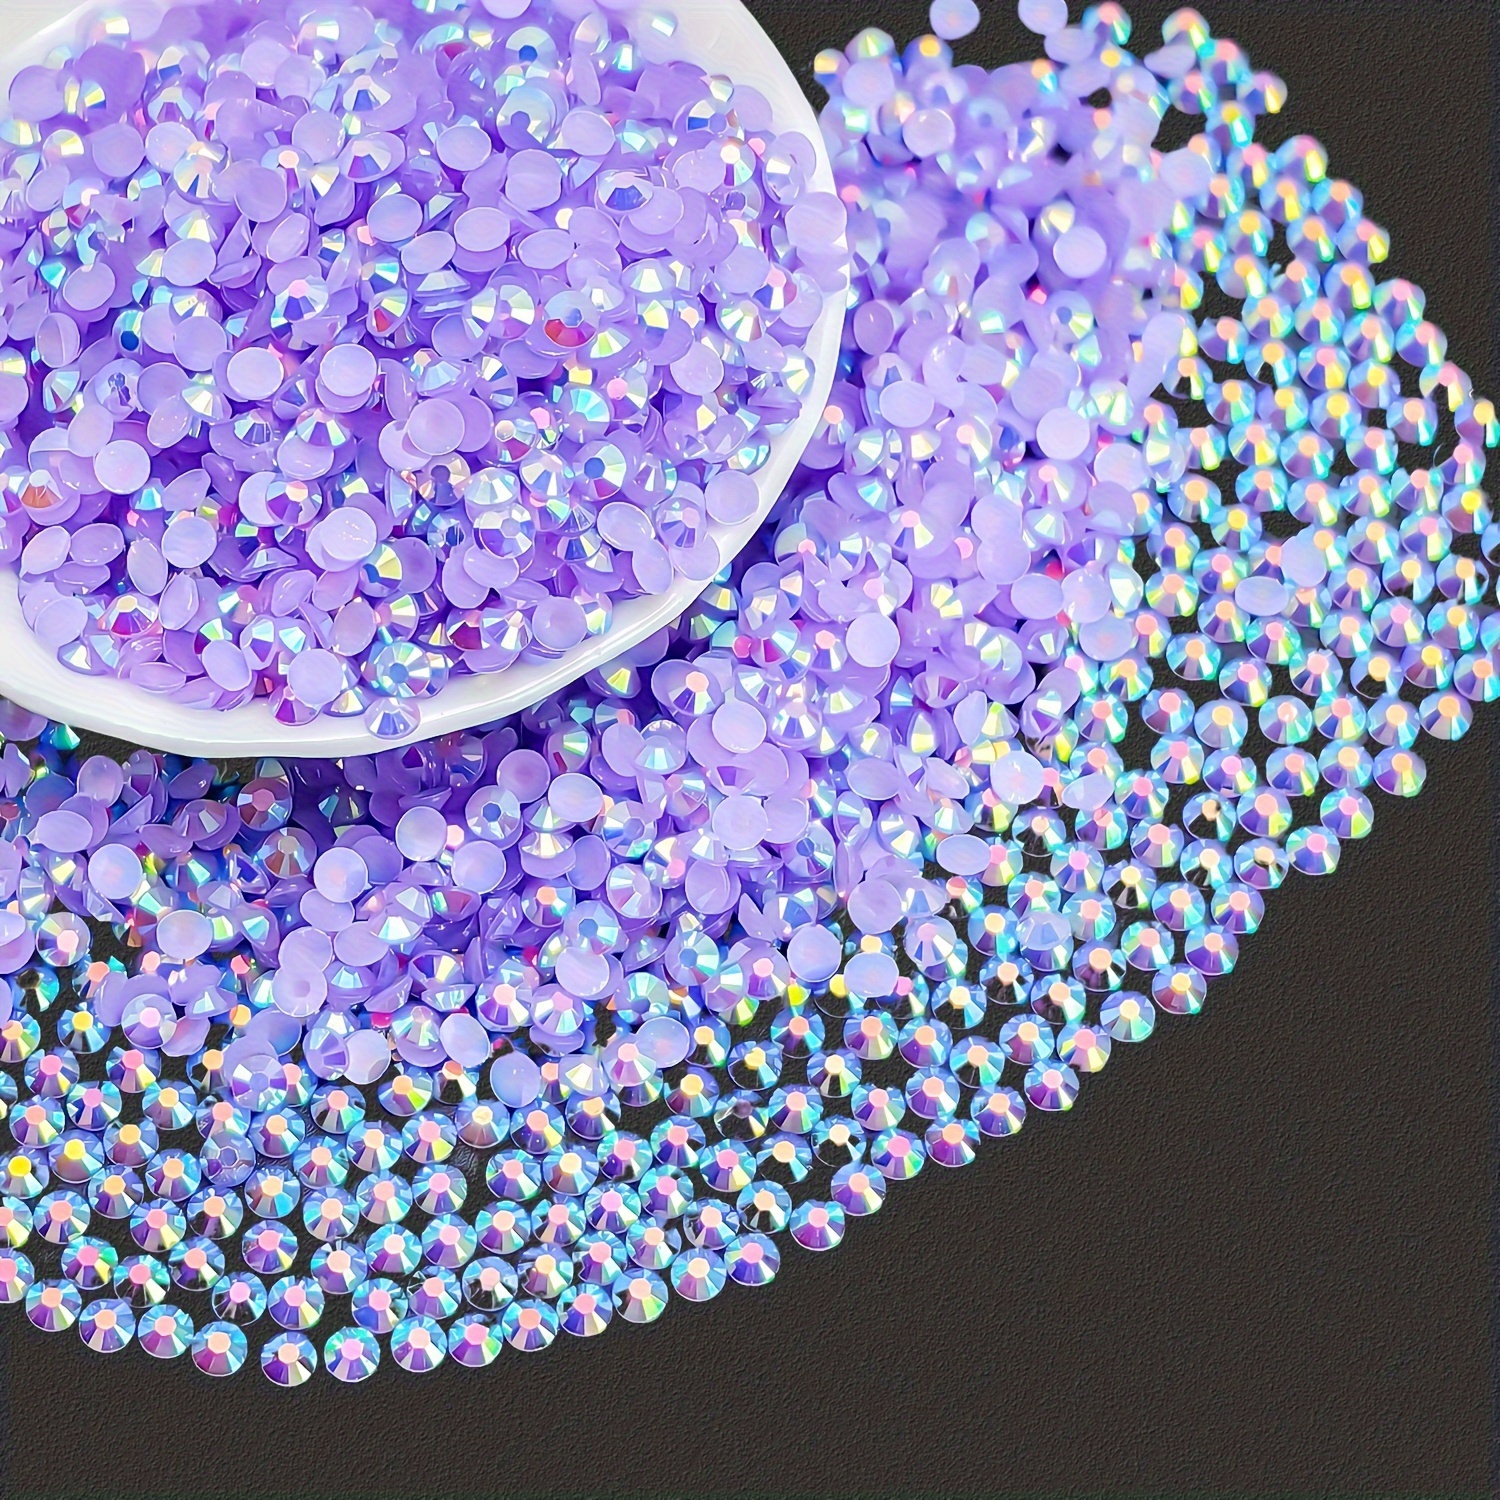 Wrapables 6mm Crystal Diamond Adhesive Rhinestones, 500 Pieces / Light Purple